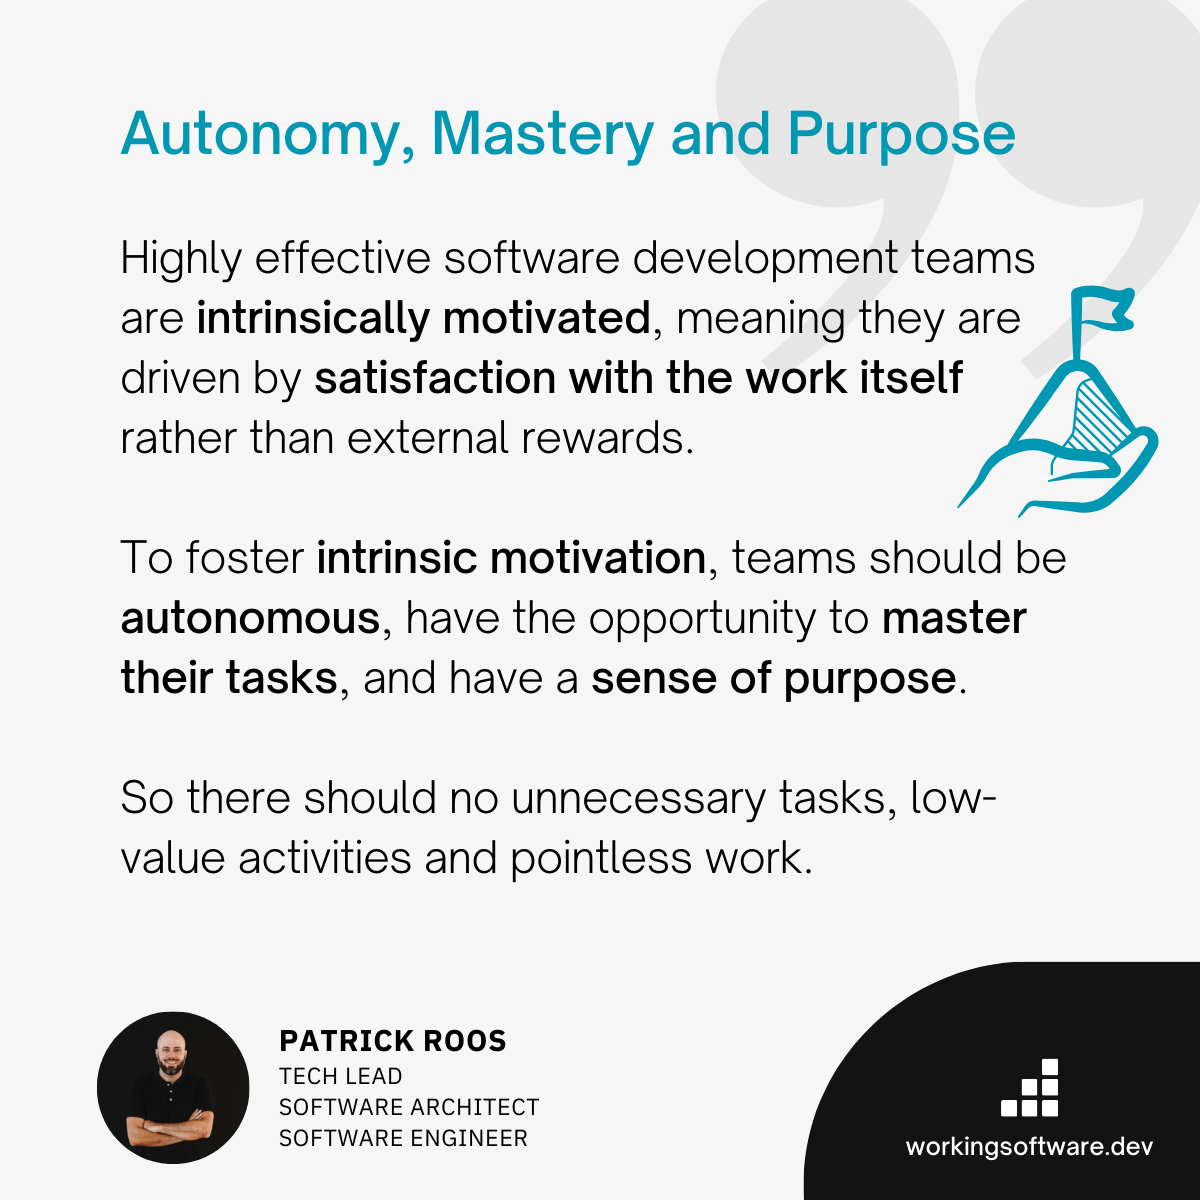 9 Essential Elements of High-Effective Software Development Teams